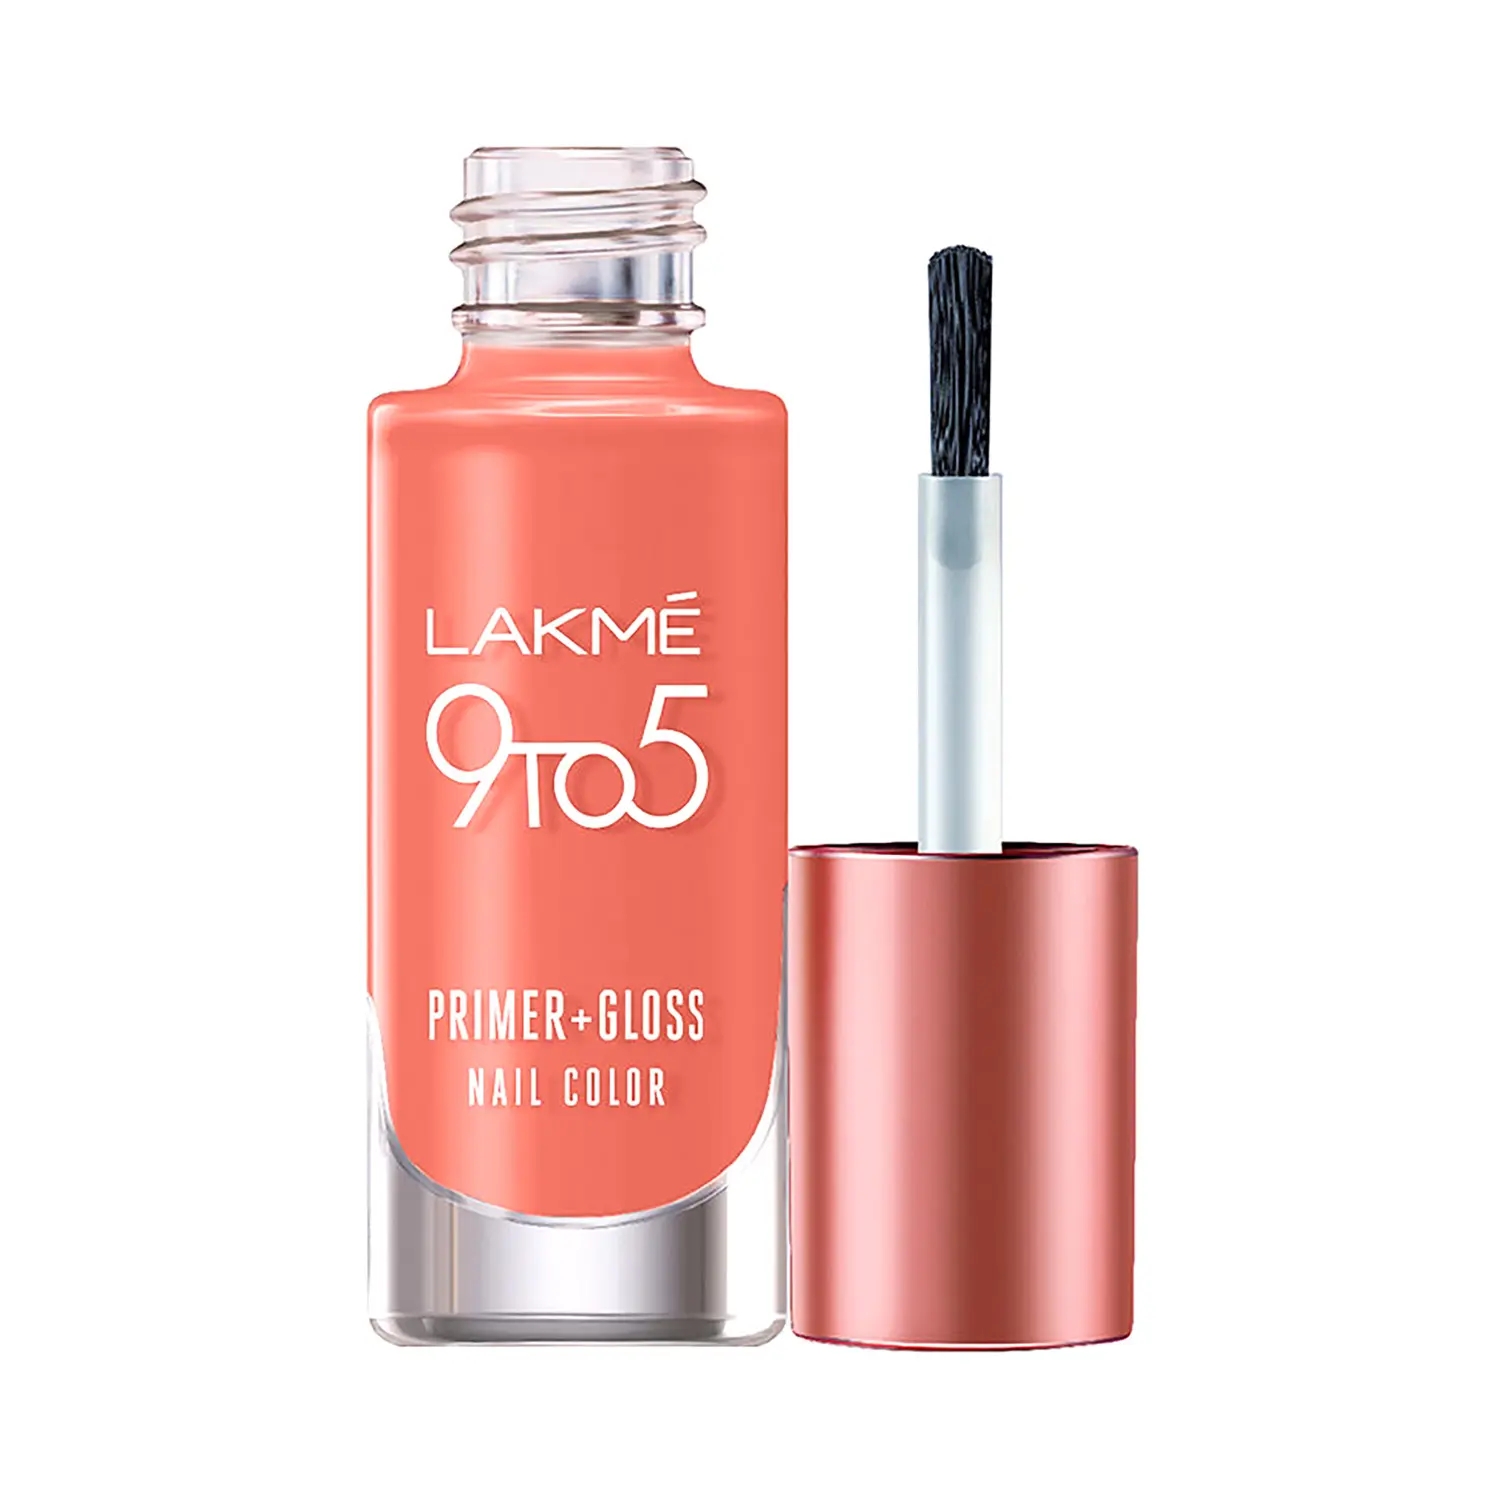 Lakme | Lakme 9To5 Primer + Gloss Nail Color - Coral Haze 6ml